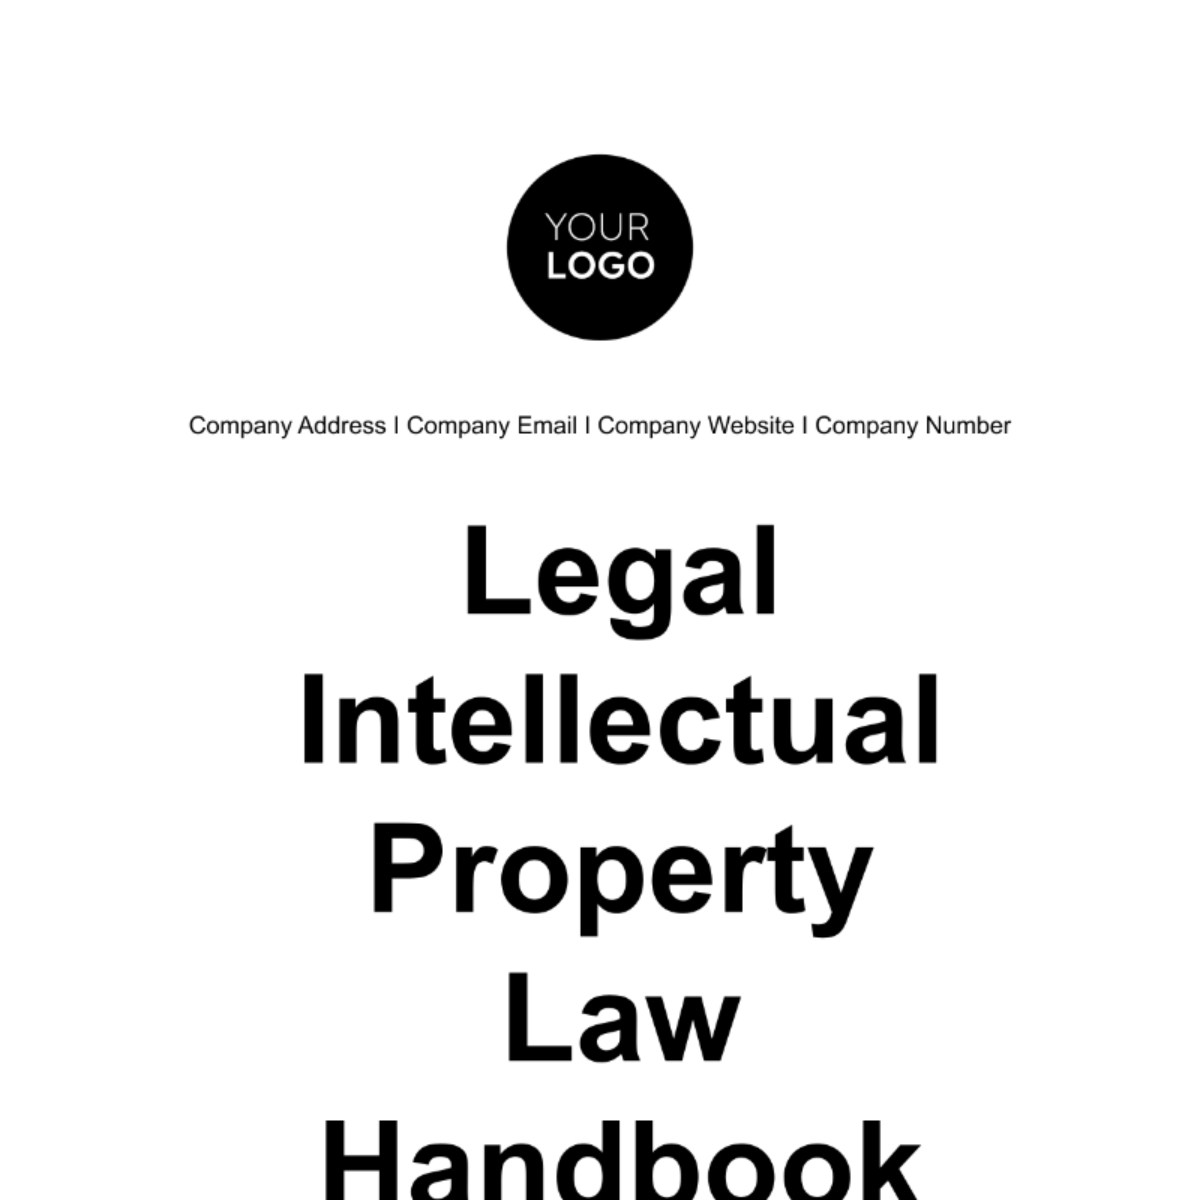 Legal Intellectual Property Law Handbook Template